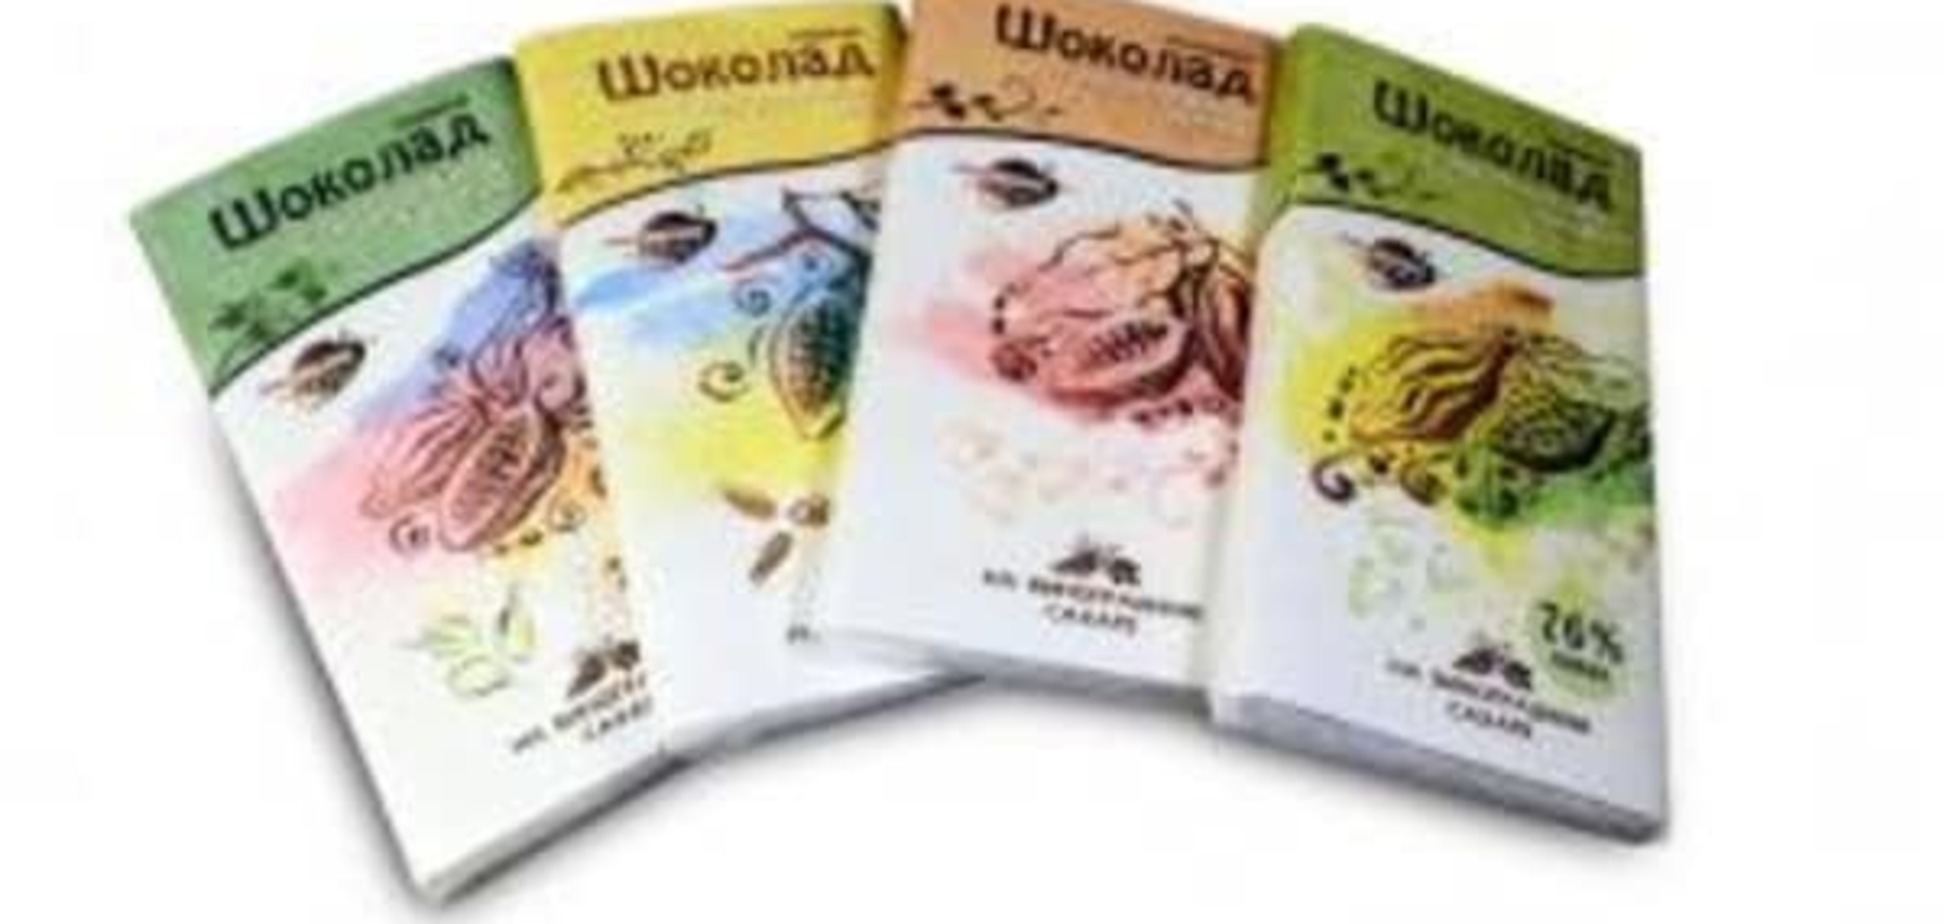 Два в одному: росіяни почали випуск 'здорового' шоколаду з коноплею. Фотофакт